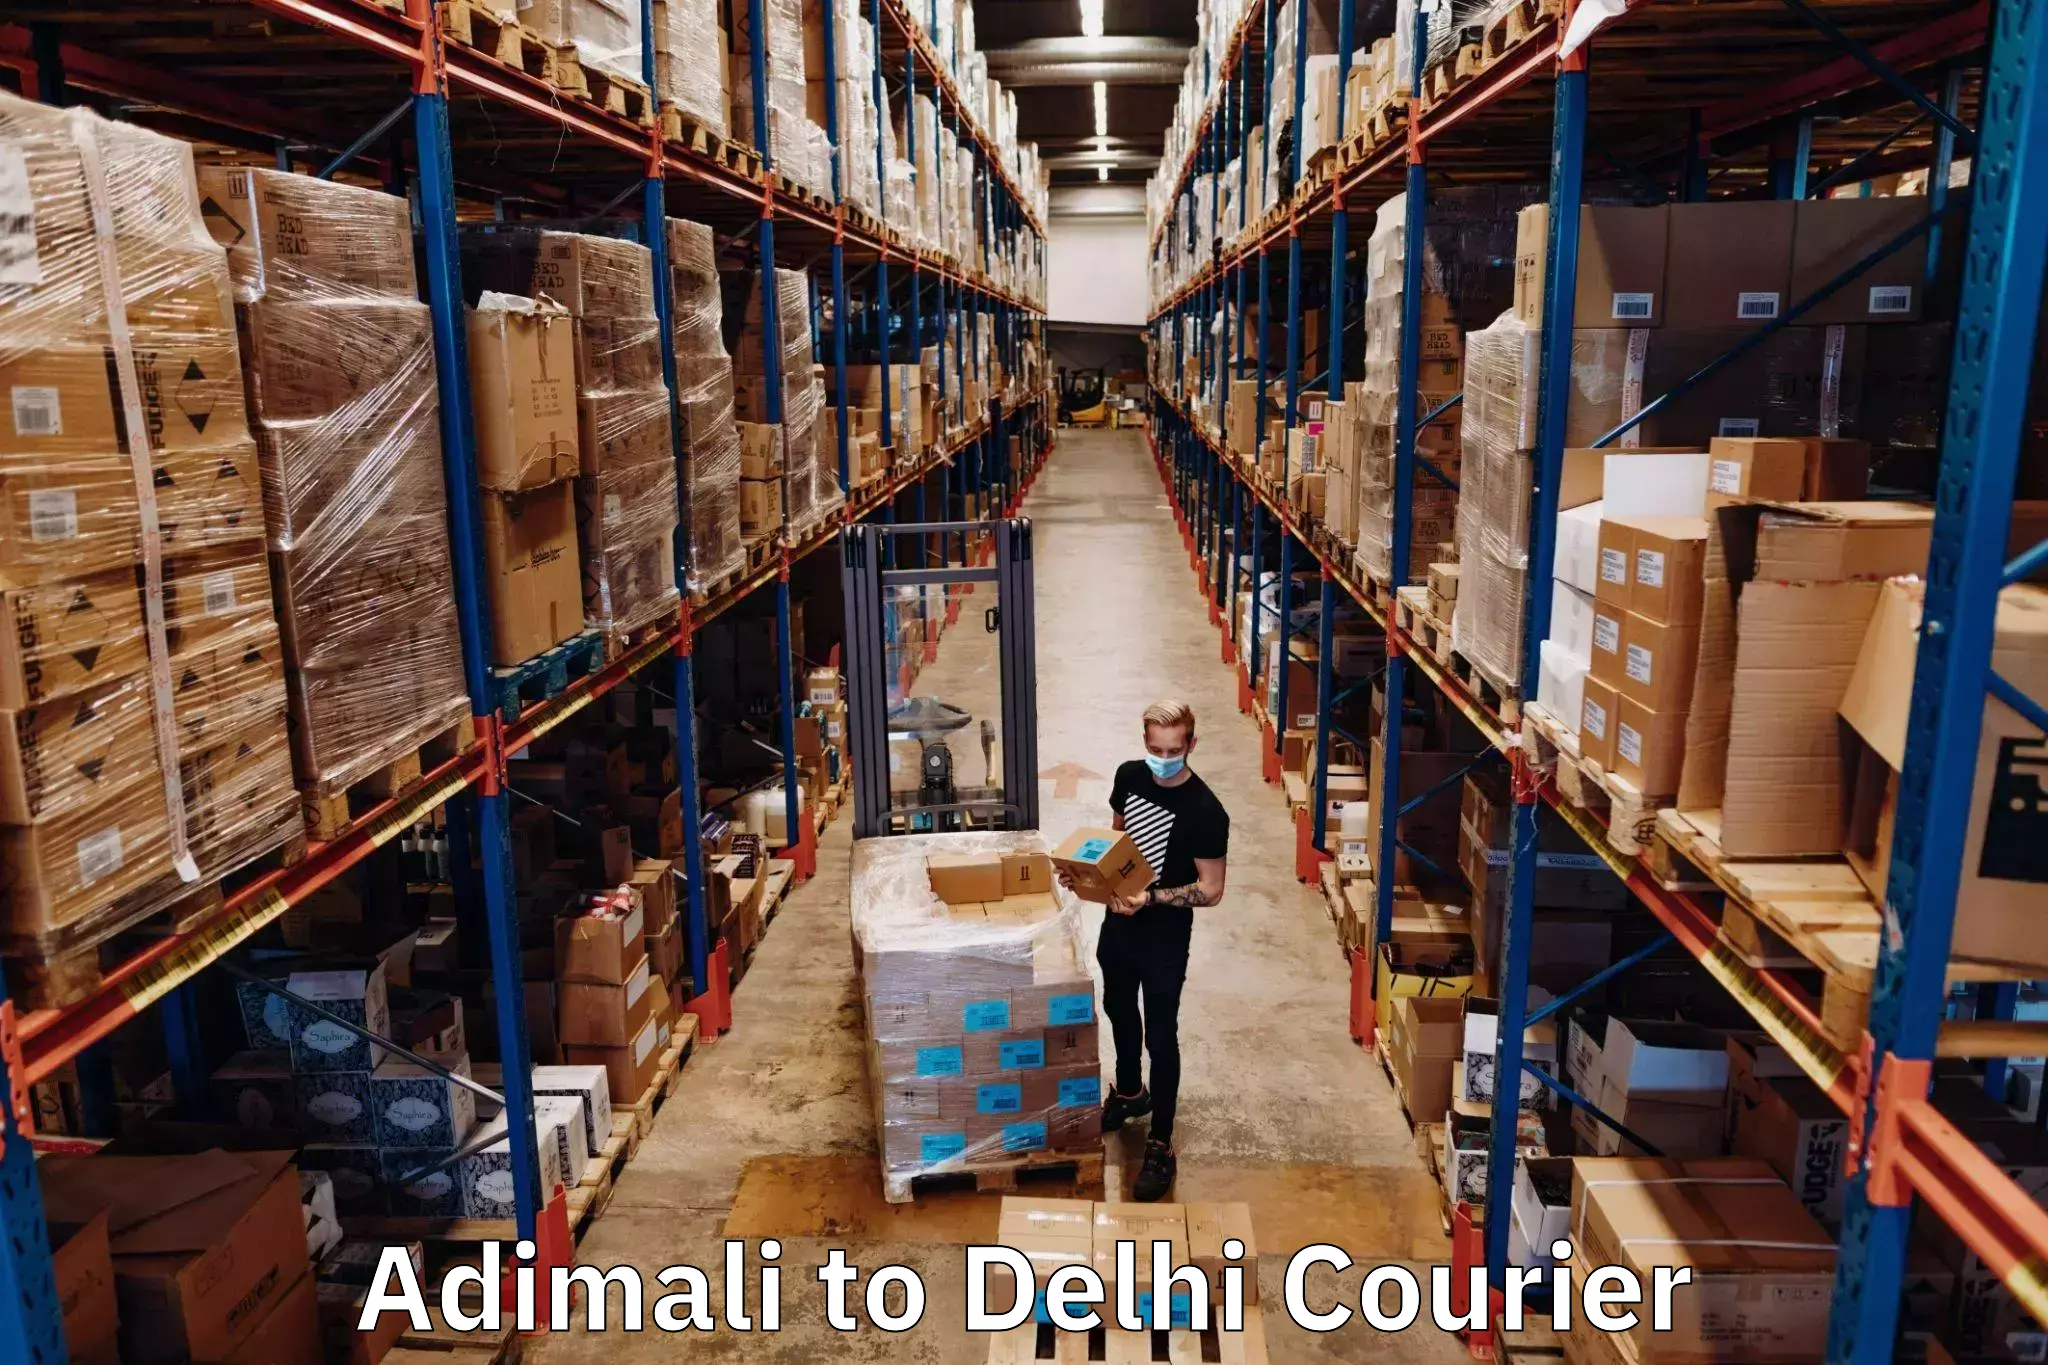 Express delivery capabilities Adimali to Delhi